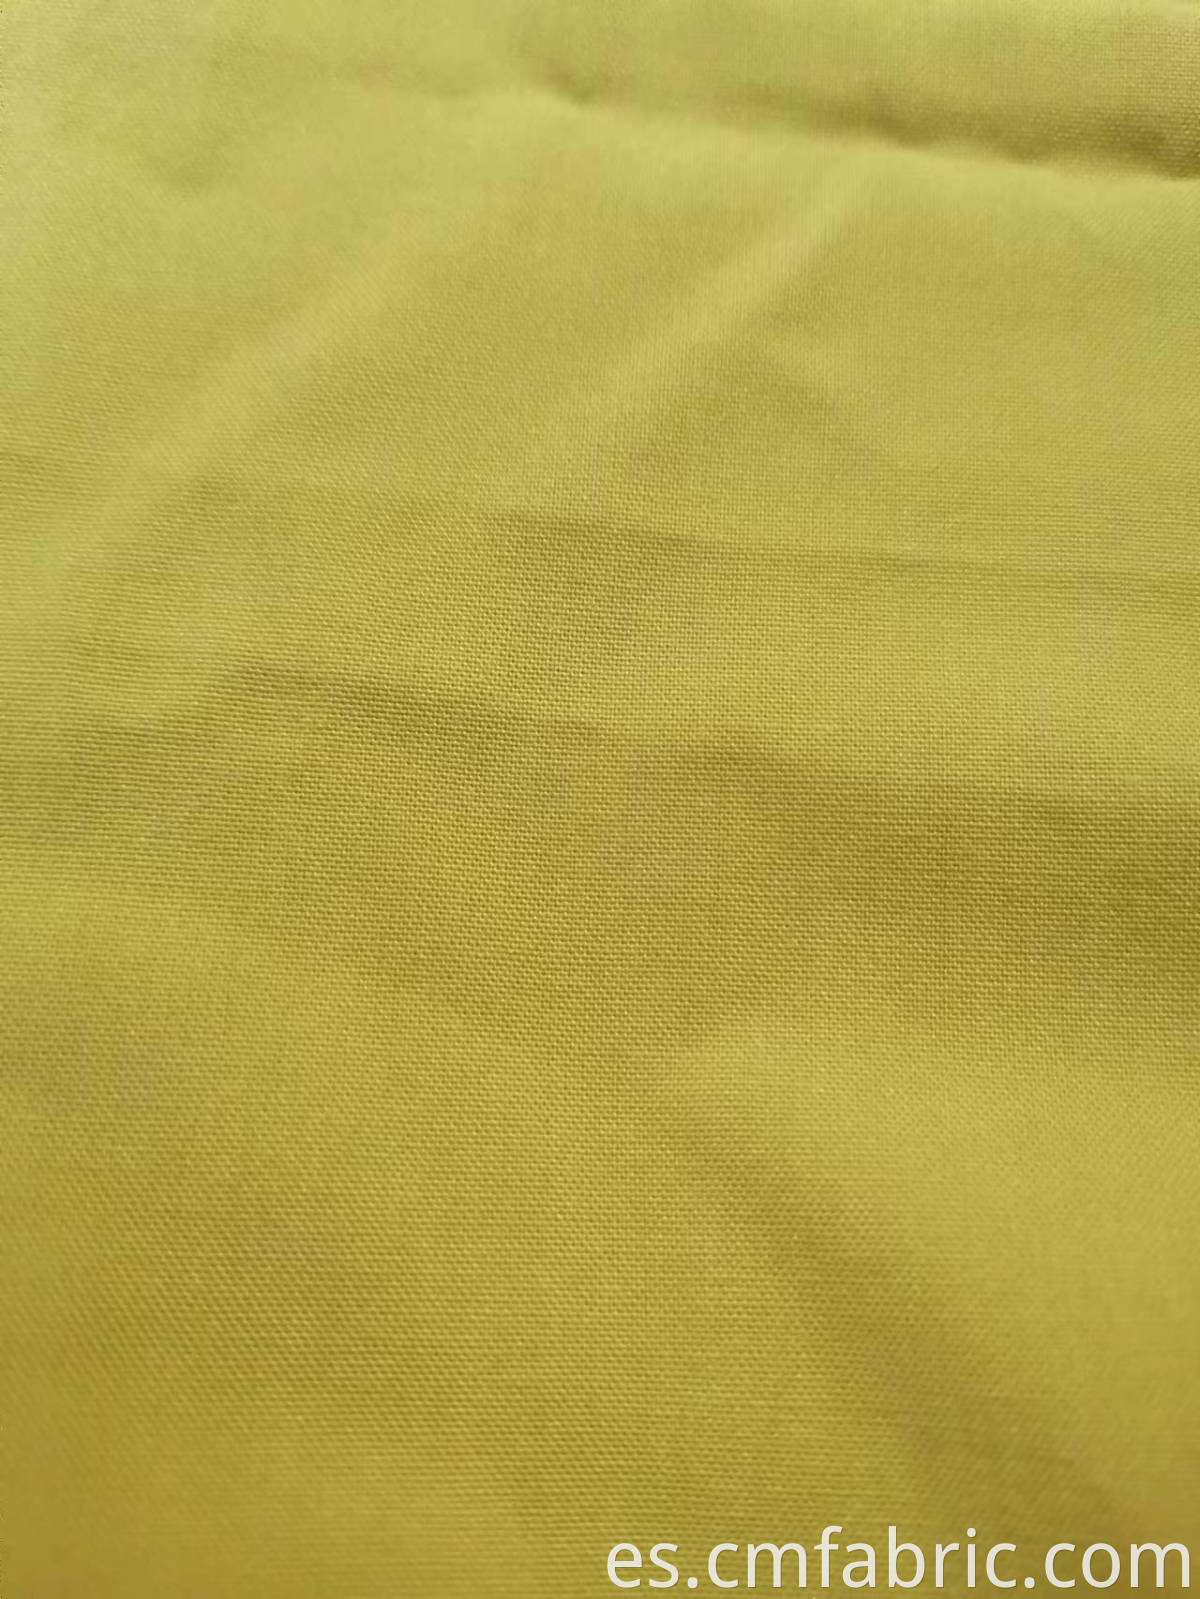 woven cotton Modal Poplin fabric